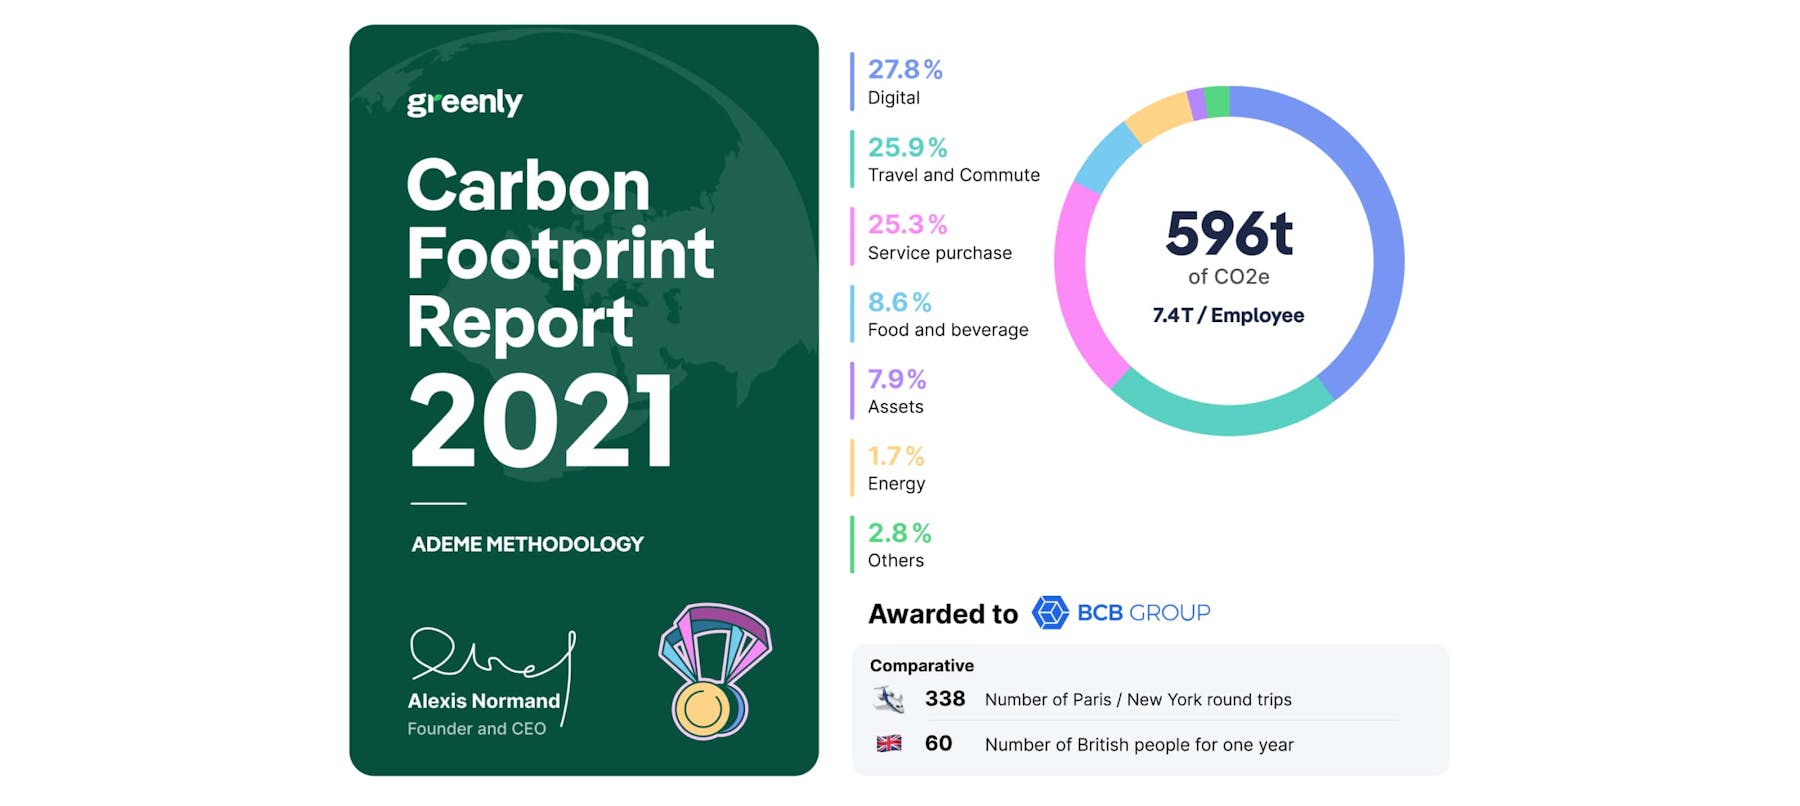 Carbon footprint report 